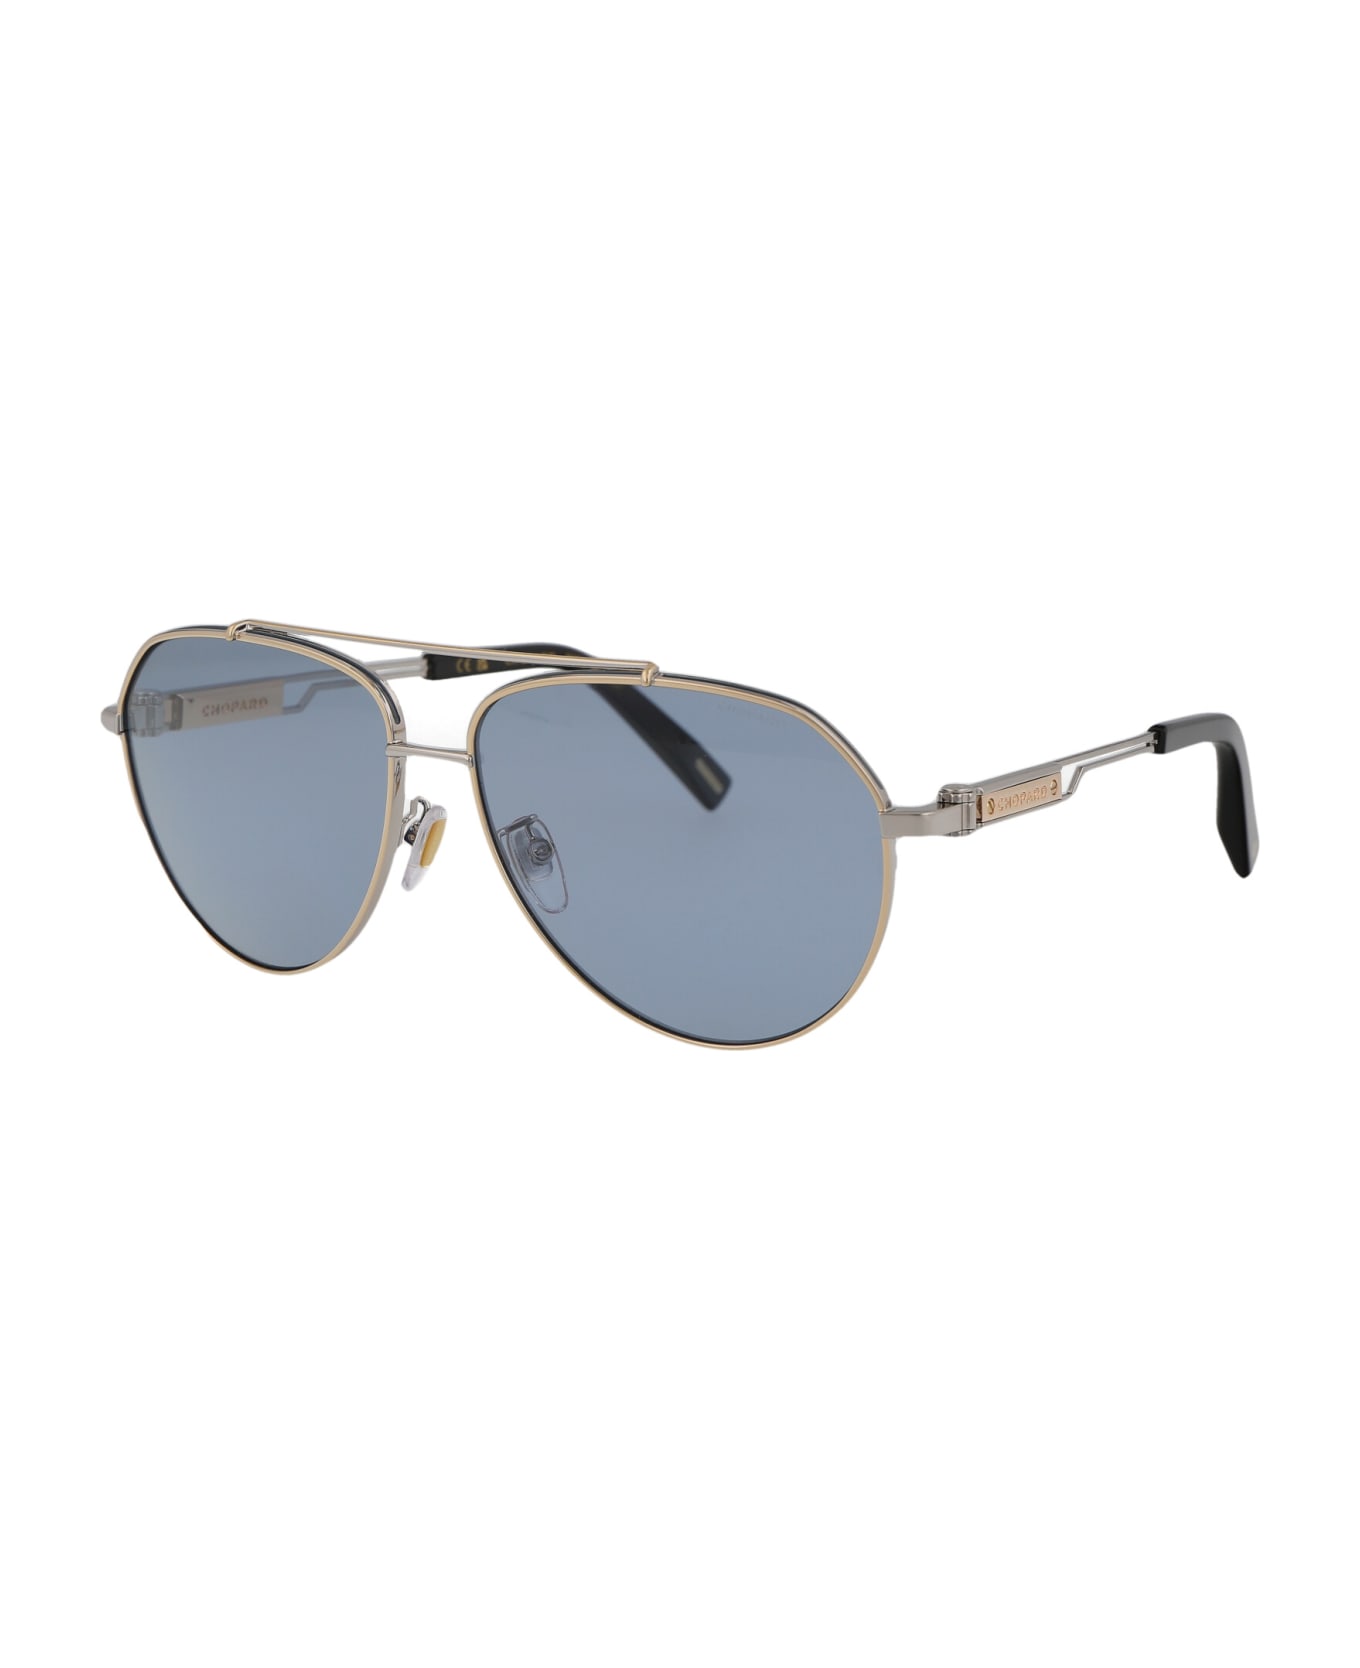 Chopard Schg63 Sunglasses - 340P GOLD C/PARTI PALLADIO LUCIDO